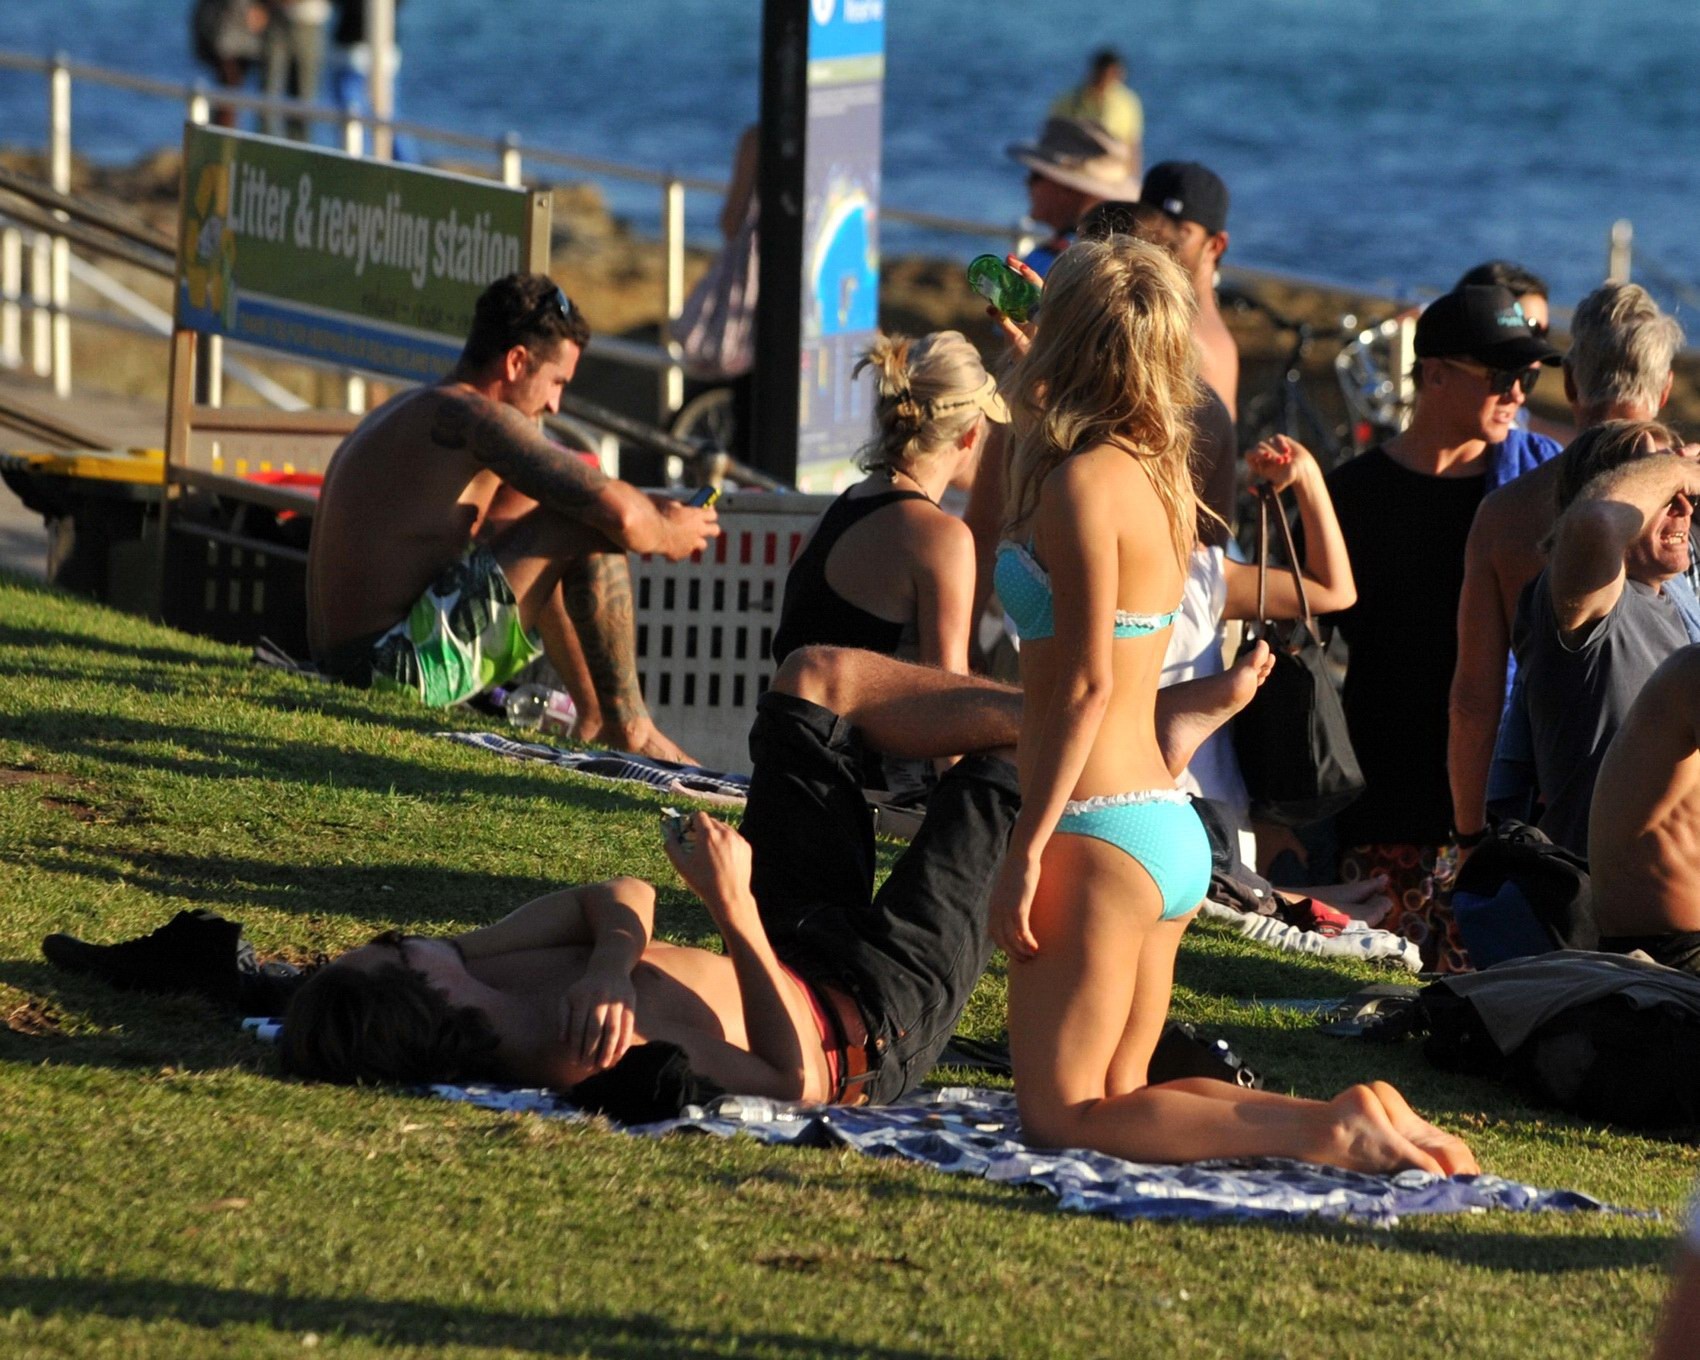 Samara Weaving in bikini petting with her boyfriend on Bondy Beach in Australia #75233674